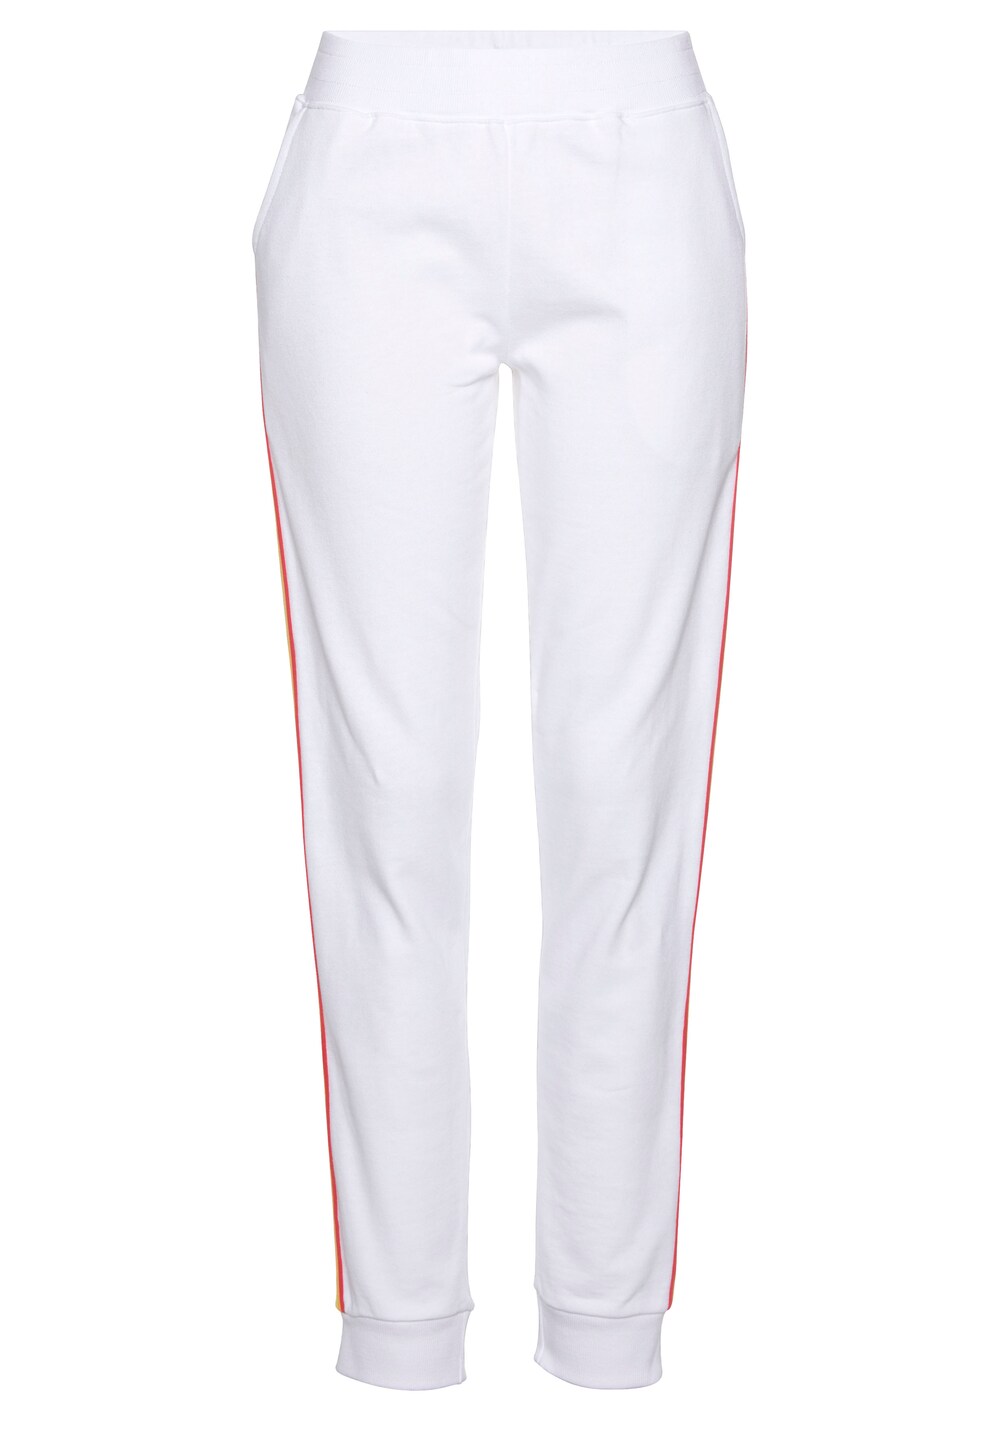 Узкие брюки LASCANA Pride, белый узкие брюки lascana серый